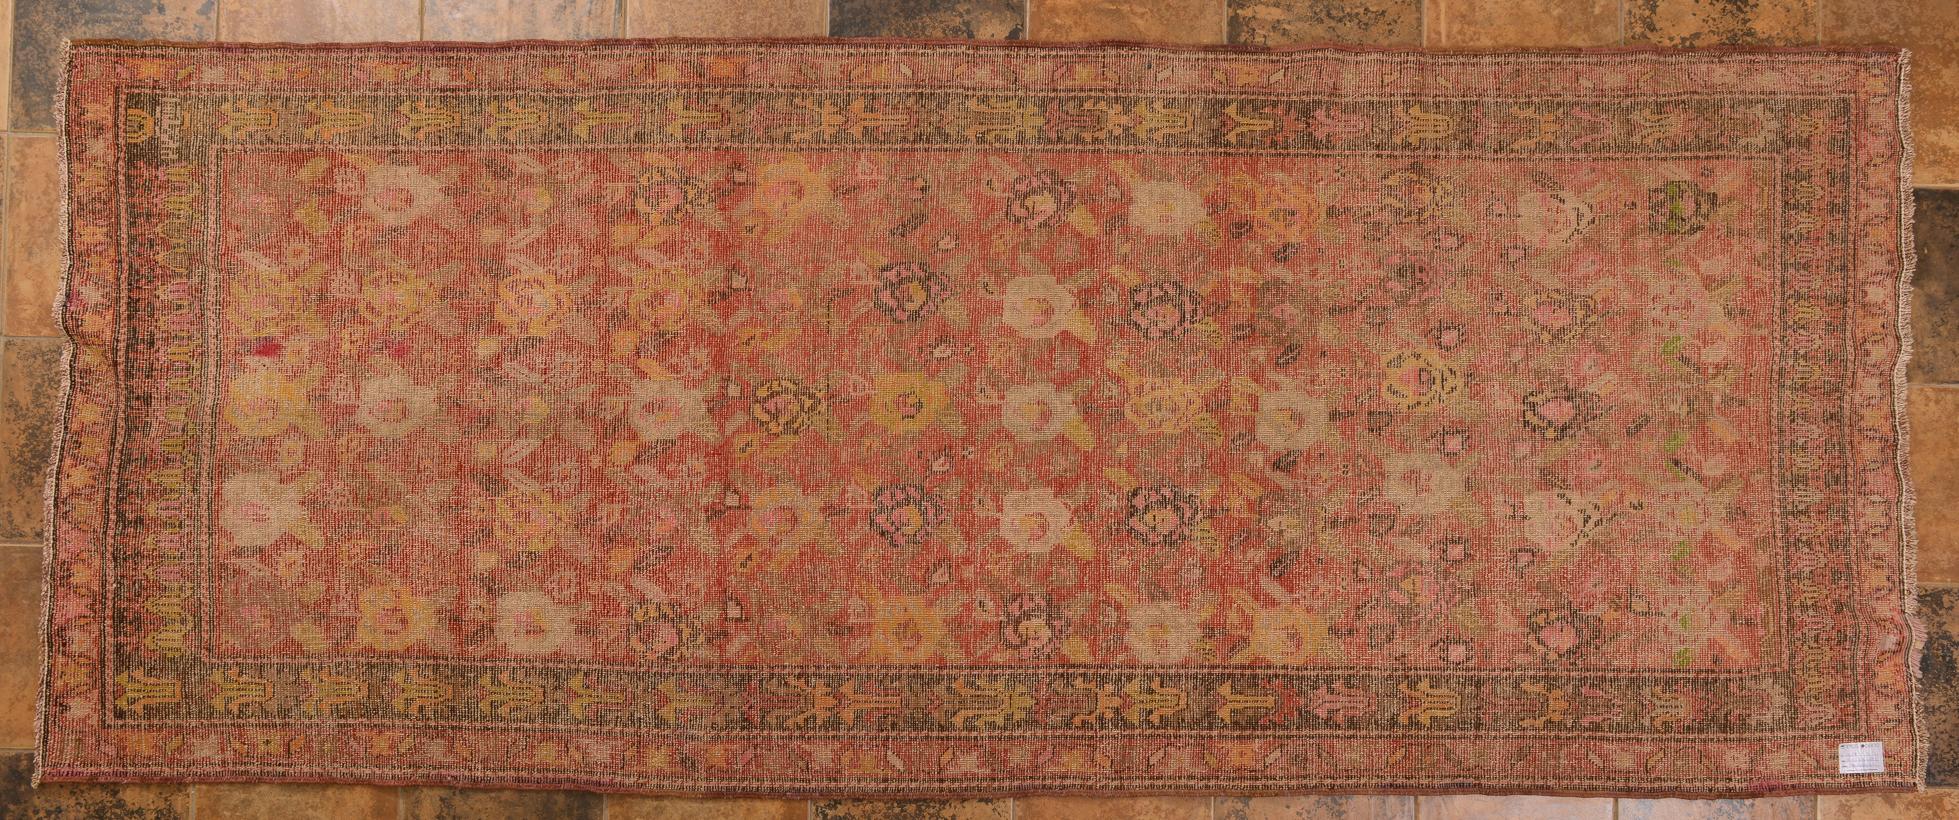 Alte Karabagh- oder Garebagh- datierter kaukasischer Teppich (Kaukasisch) im Angebot